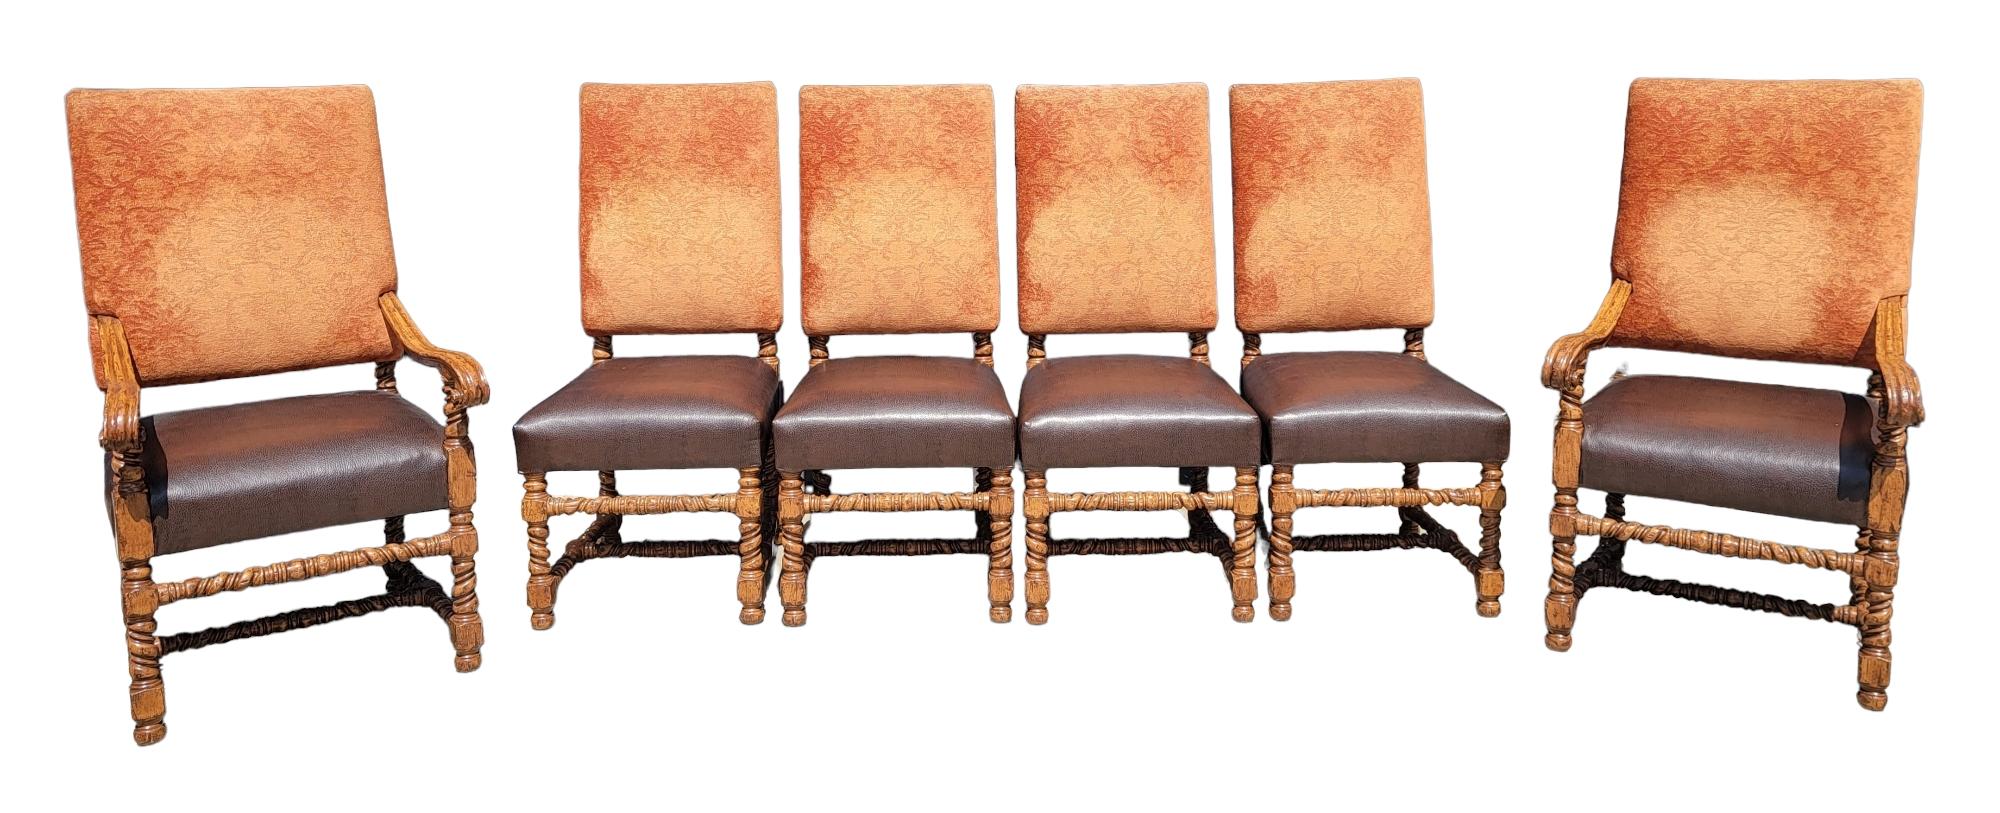 Vintage Set of Ten Spanish Revival Barley Twist High Back Chairs 8